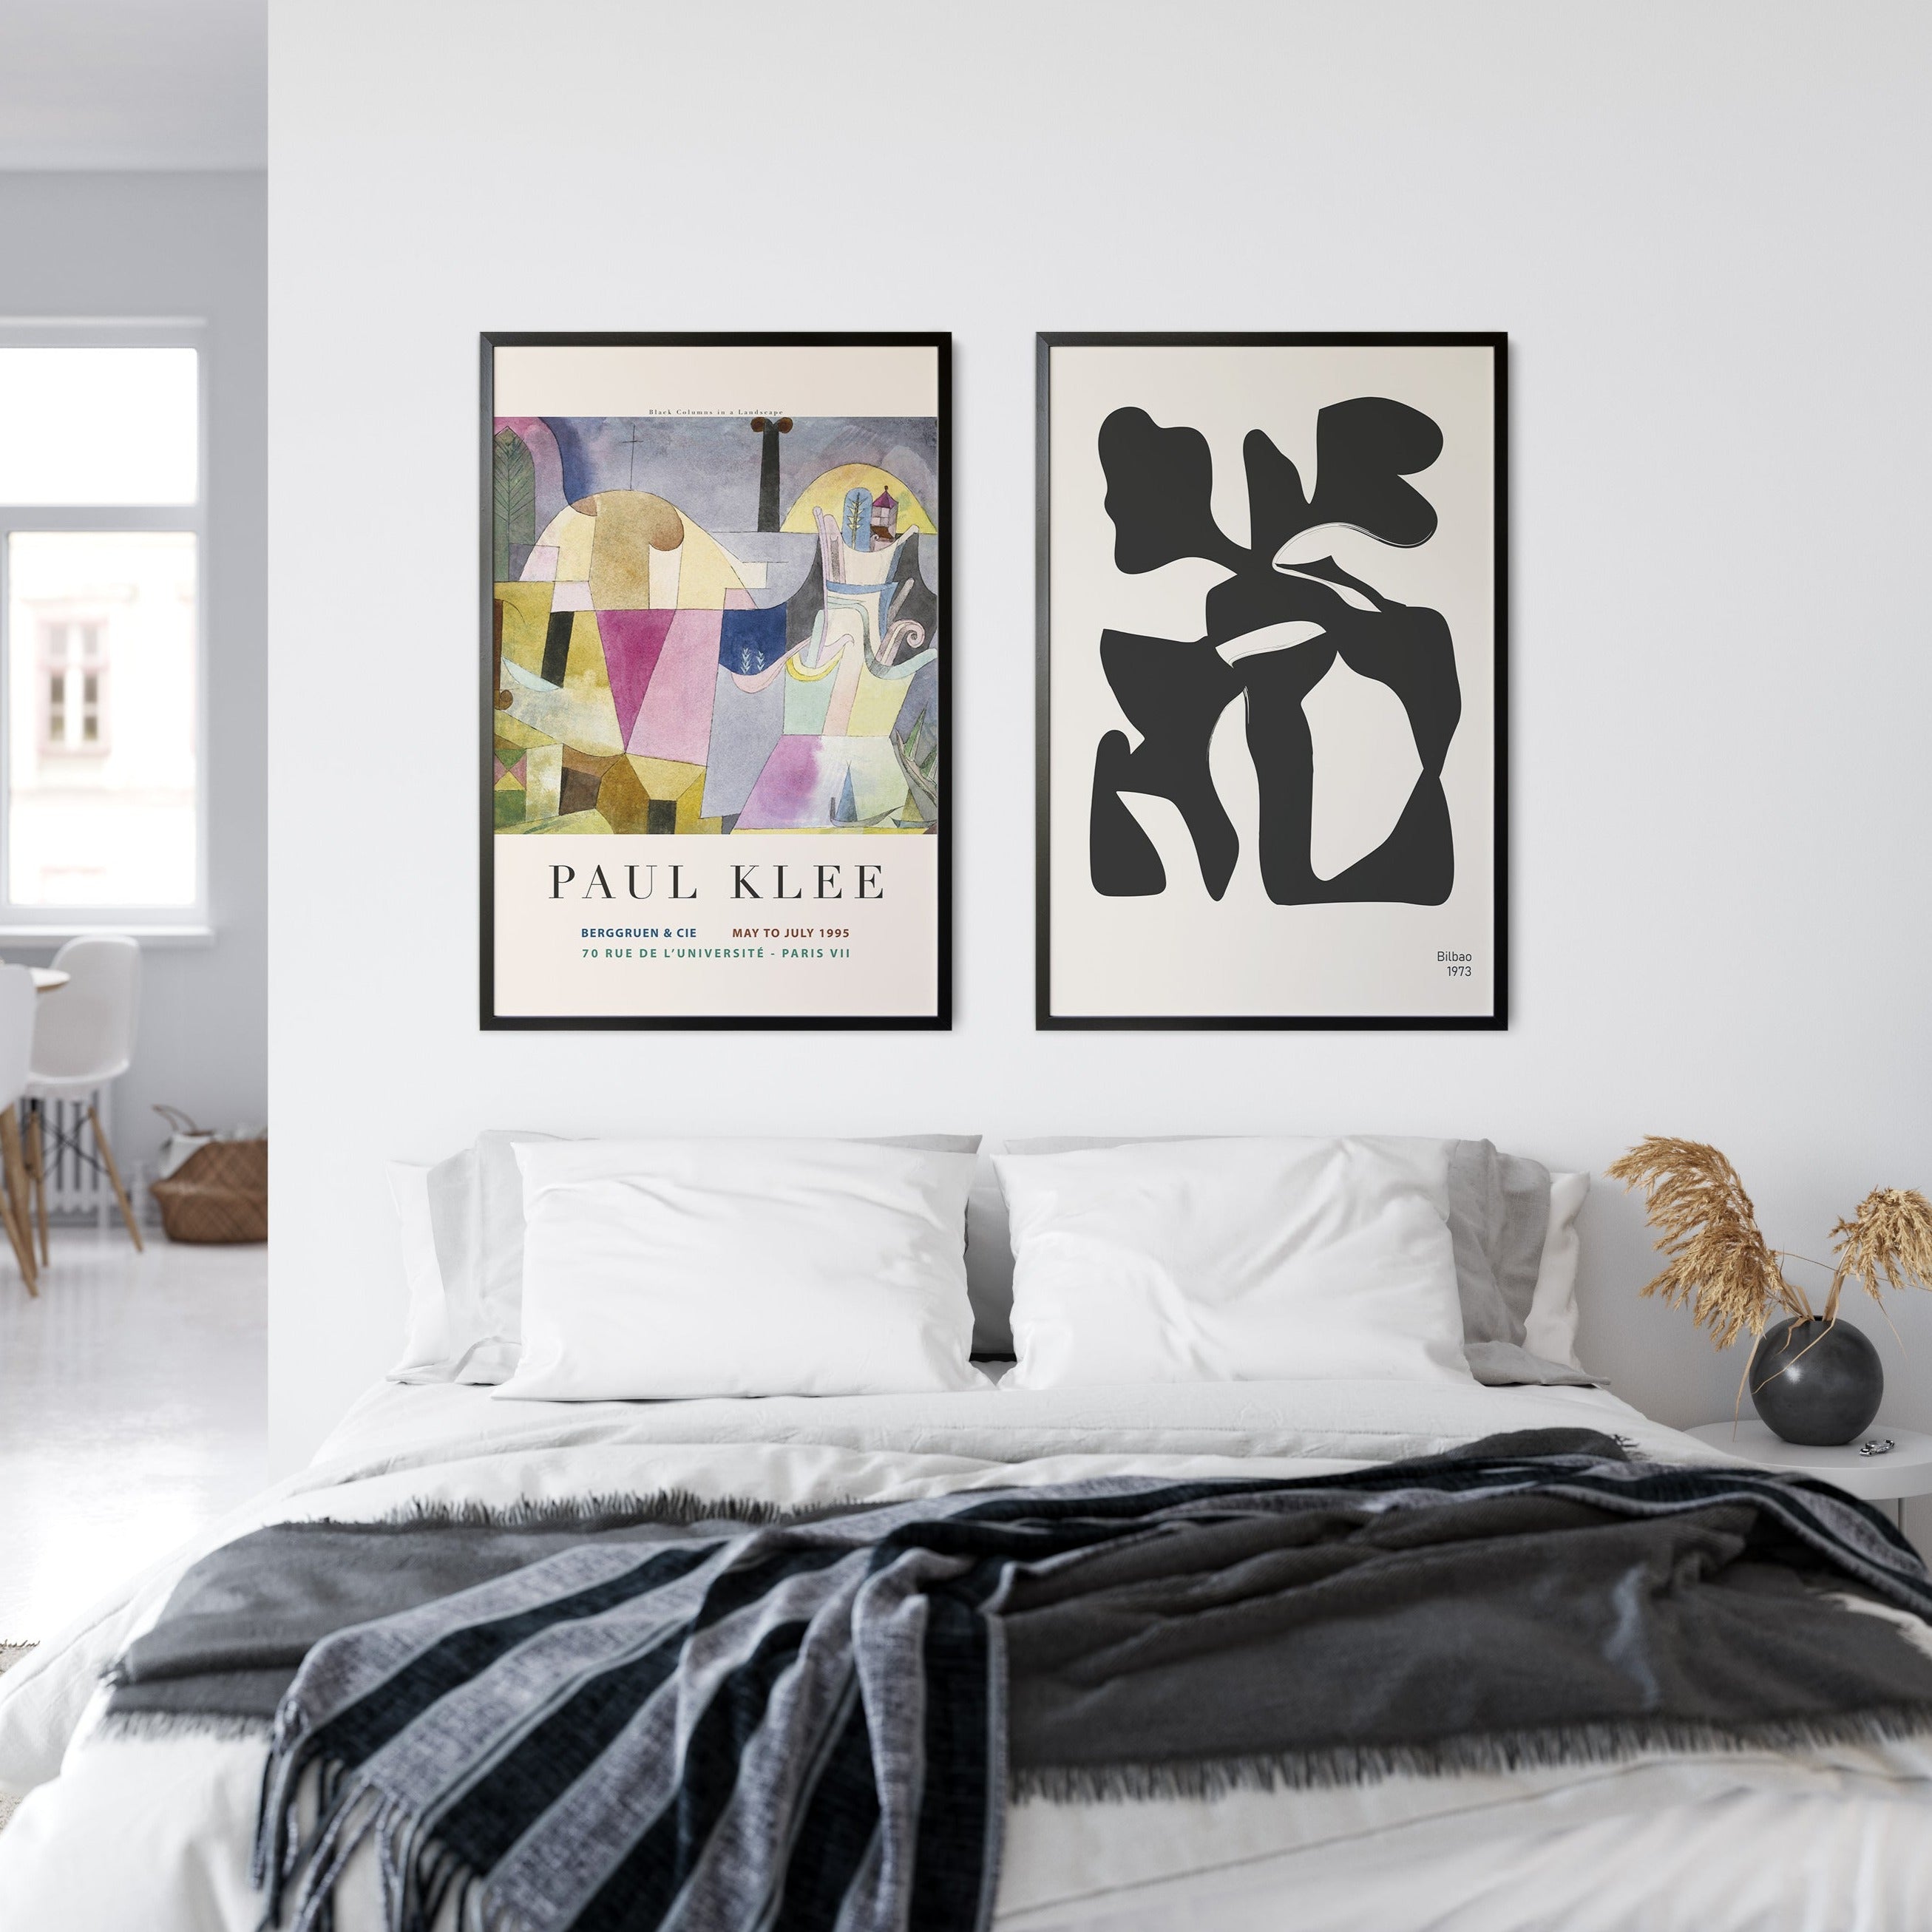 Paul Klee Poster - Black Columns in a Landscape